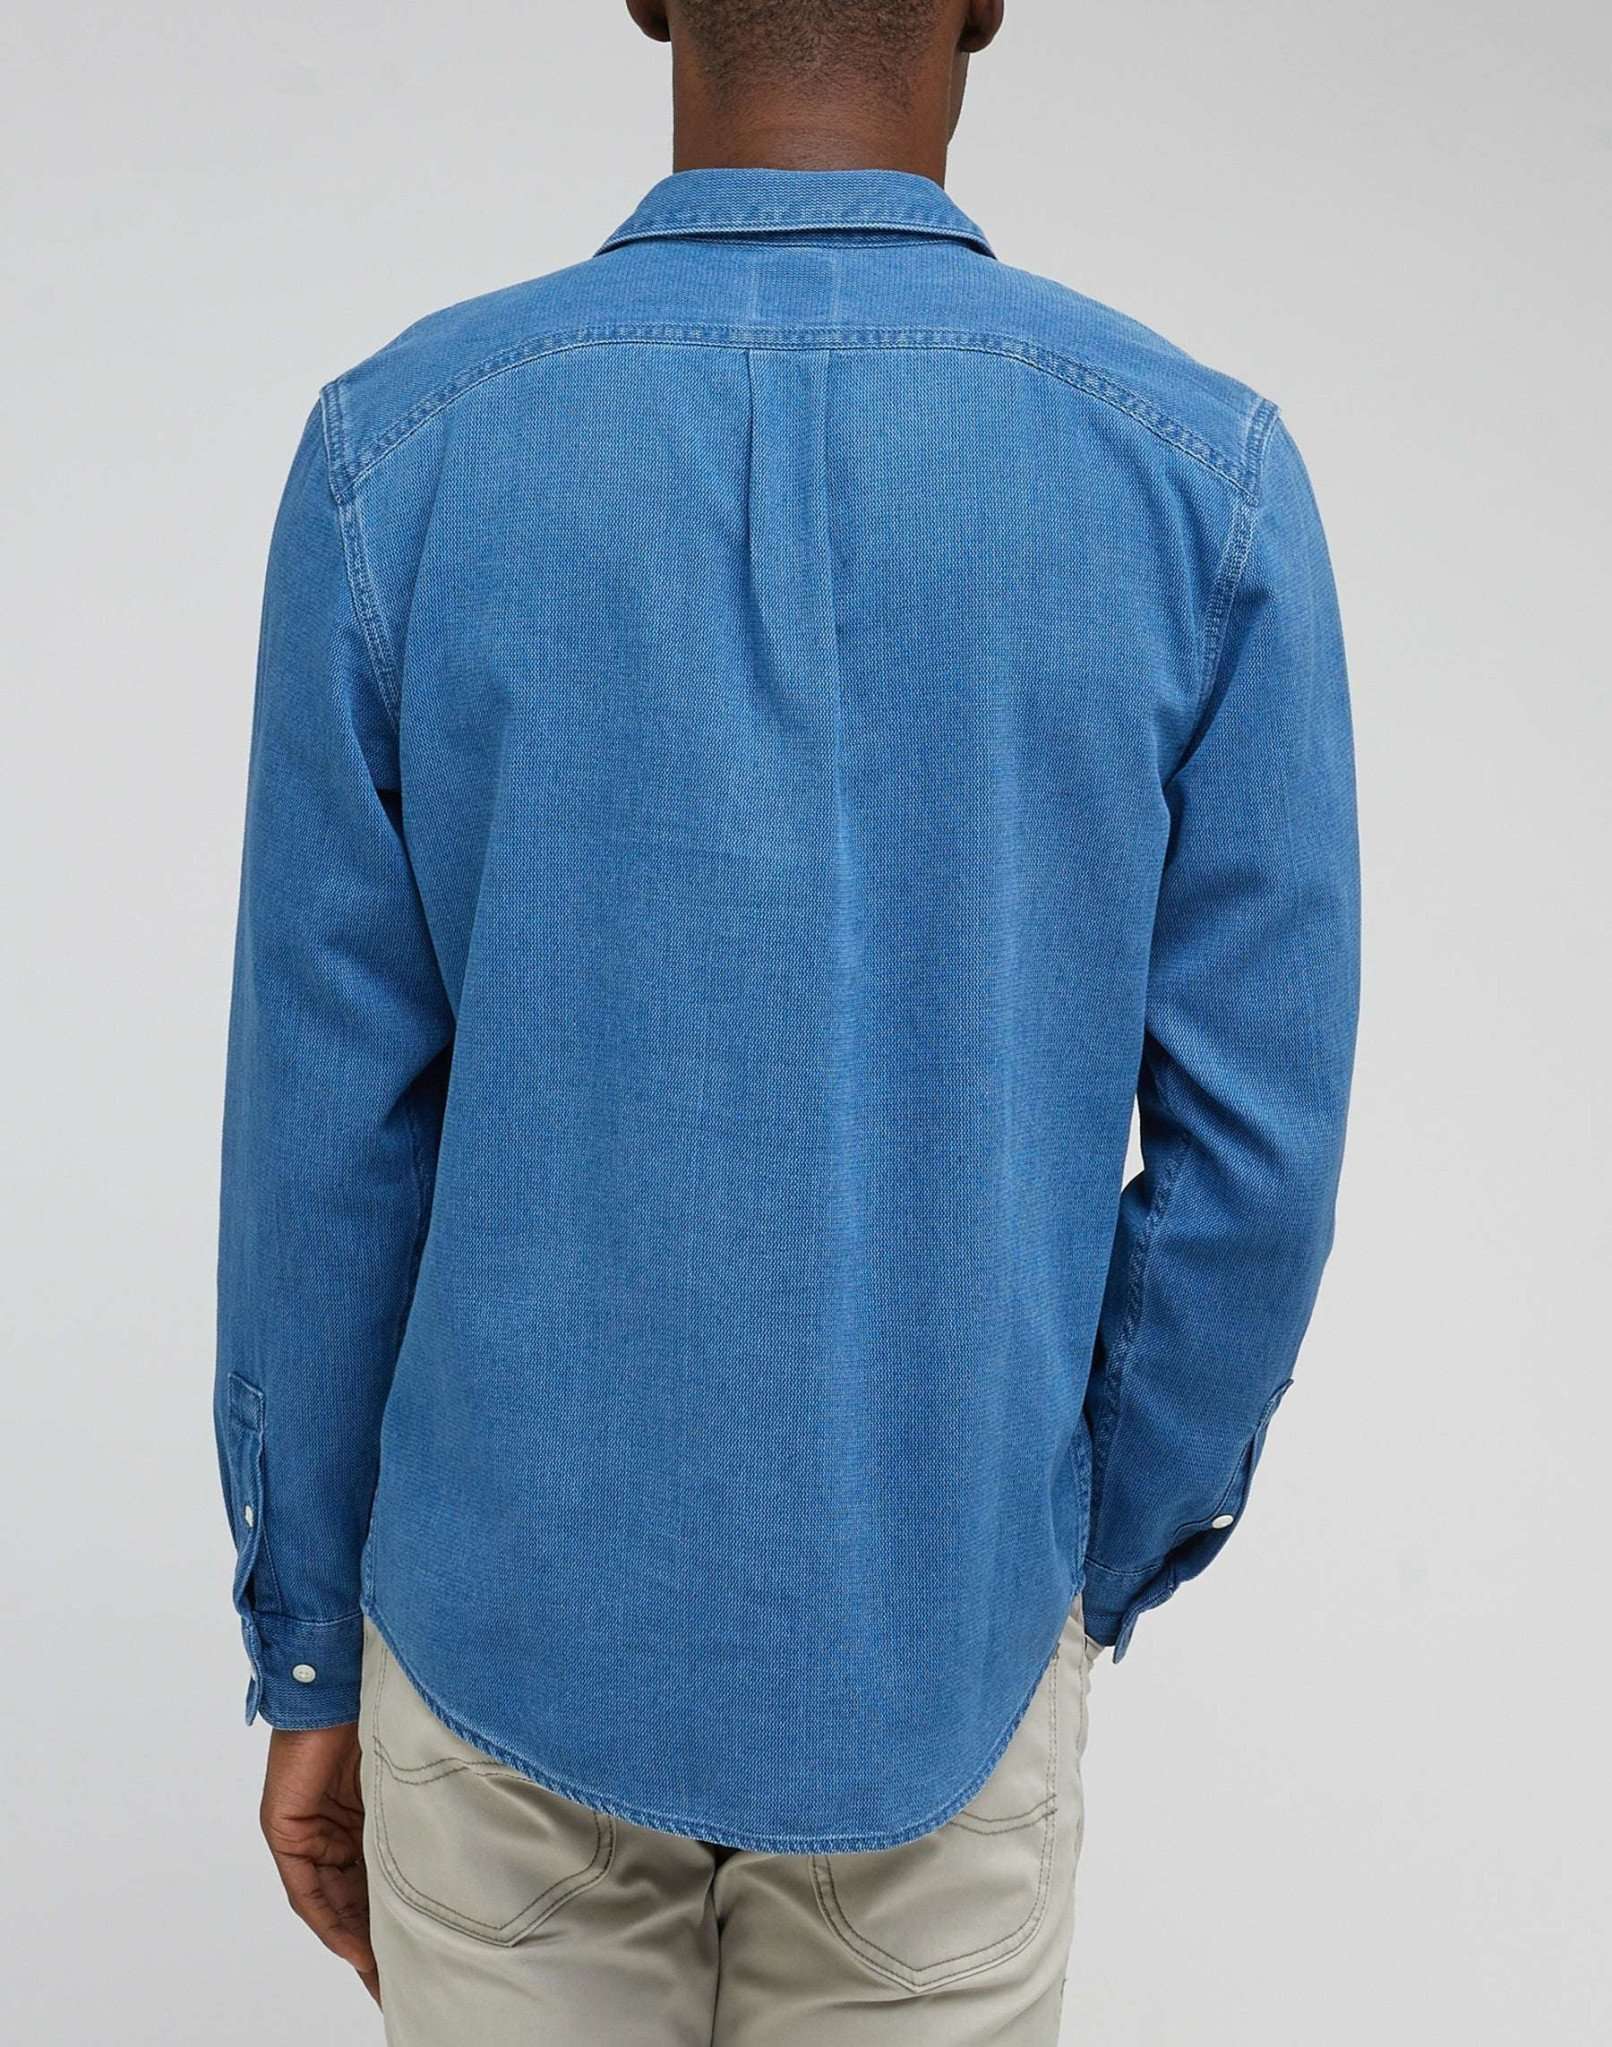 Riveted Shirt in Anthem Blue Jeanshemden Lee   